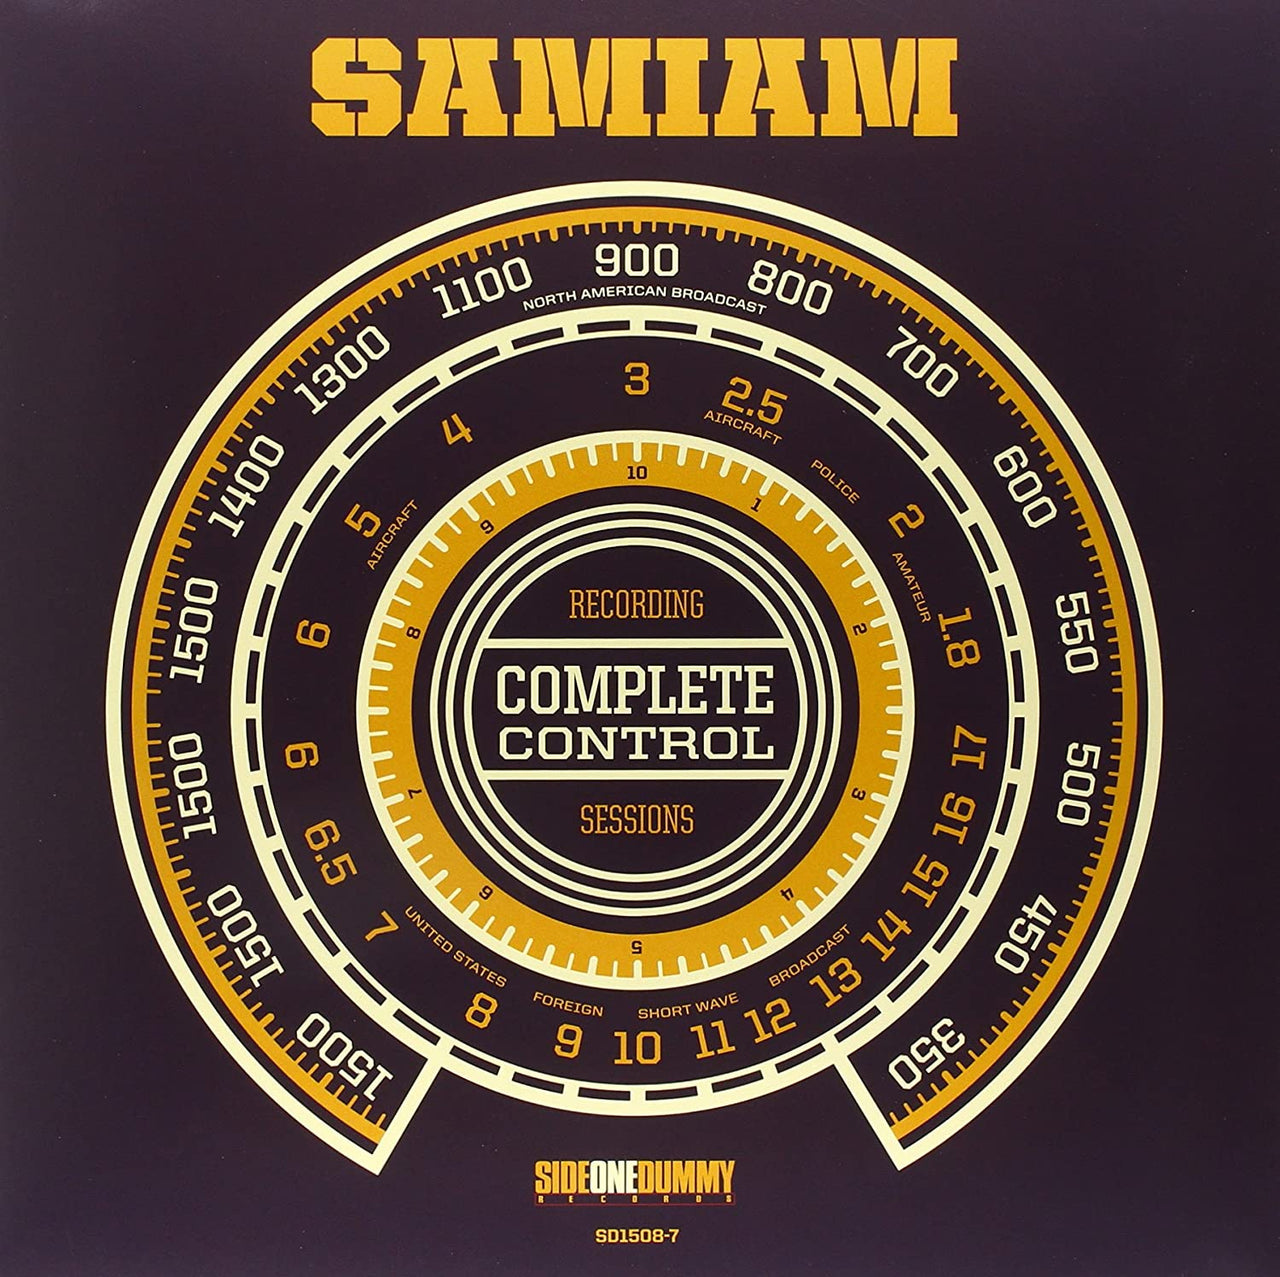 Samiam "Complete Control Sessions" 12" Vinyl